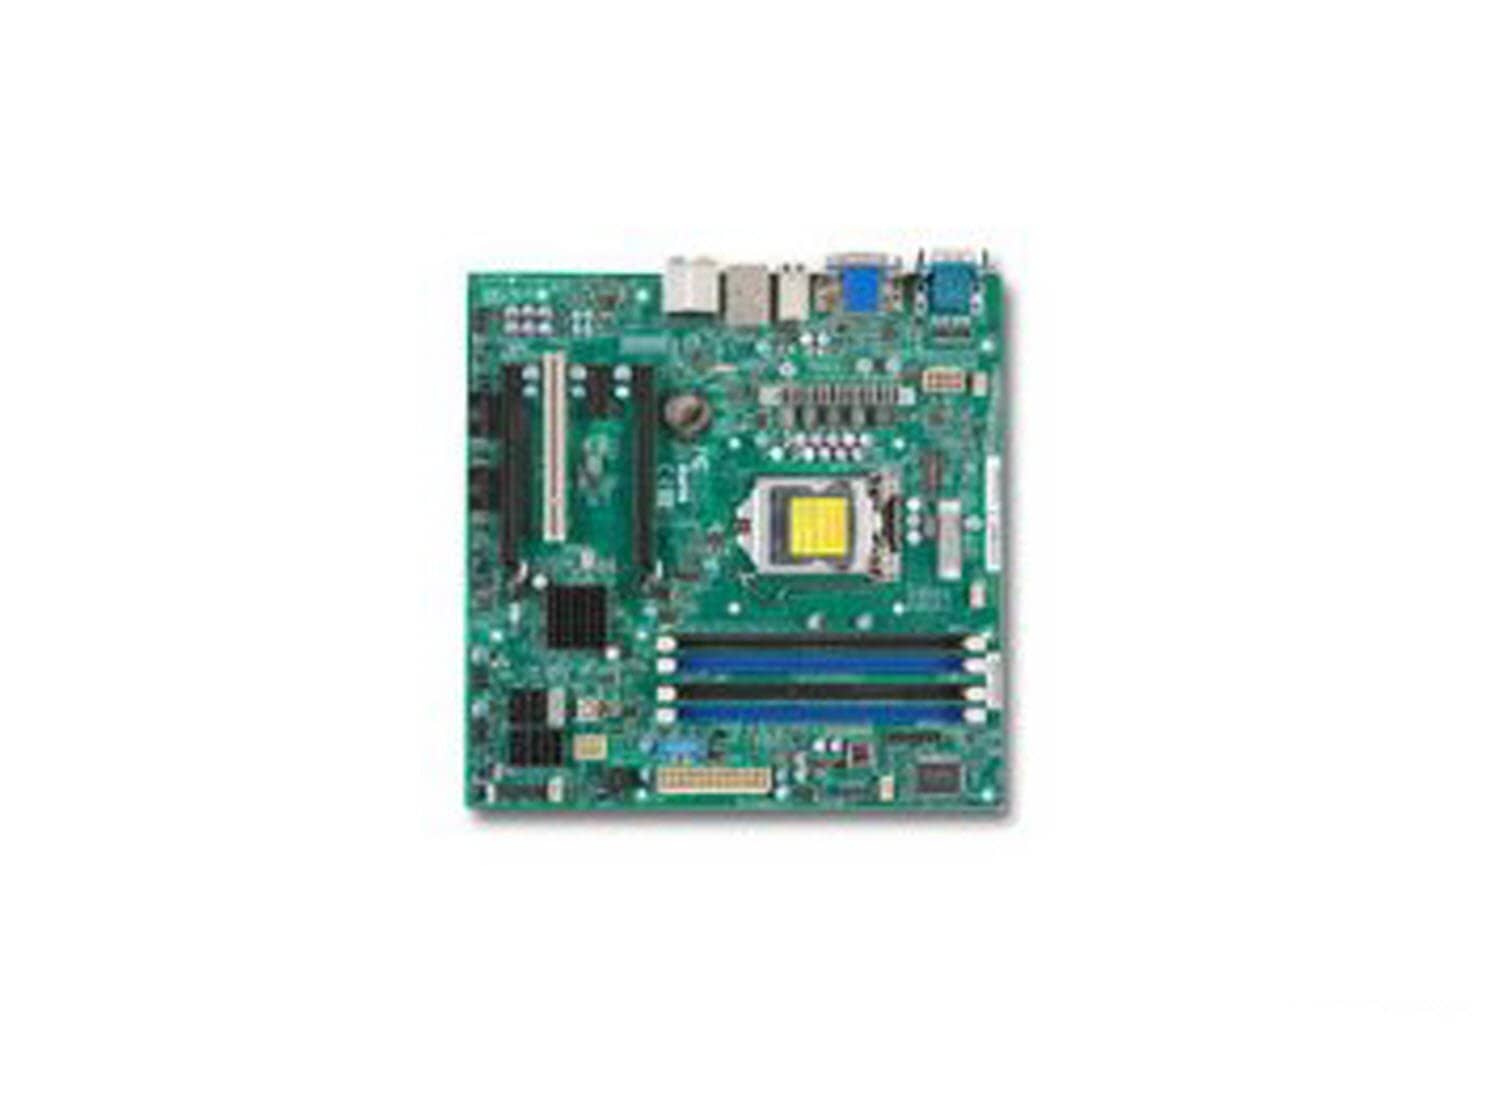 Supermicro Micro ATX DDR3 1600 Intel - LGA 1155 Motherboards C7B75-O